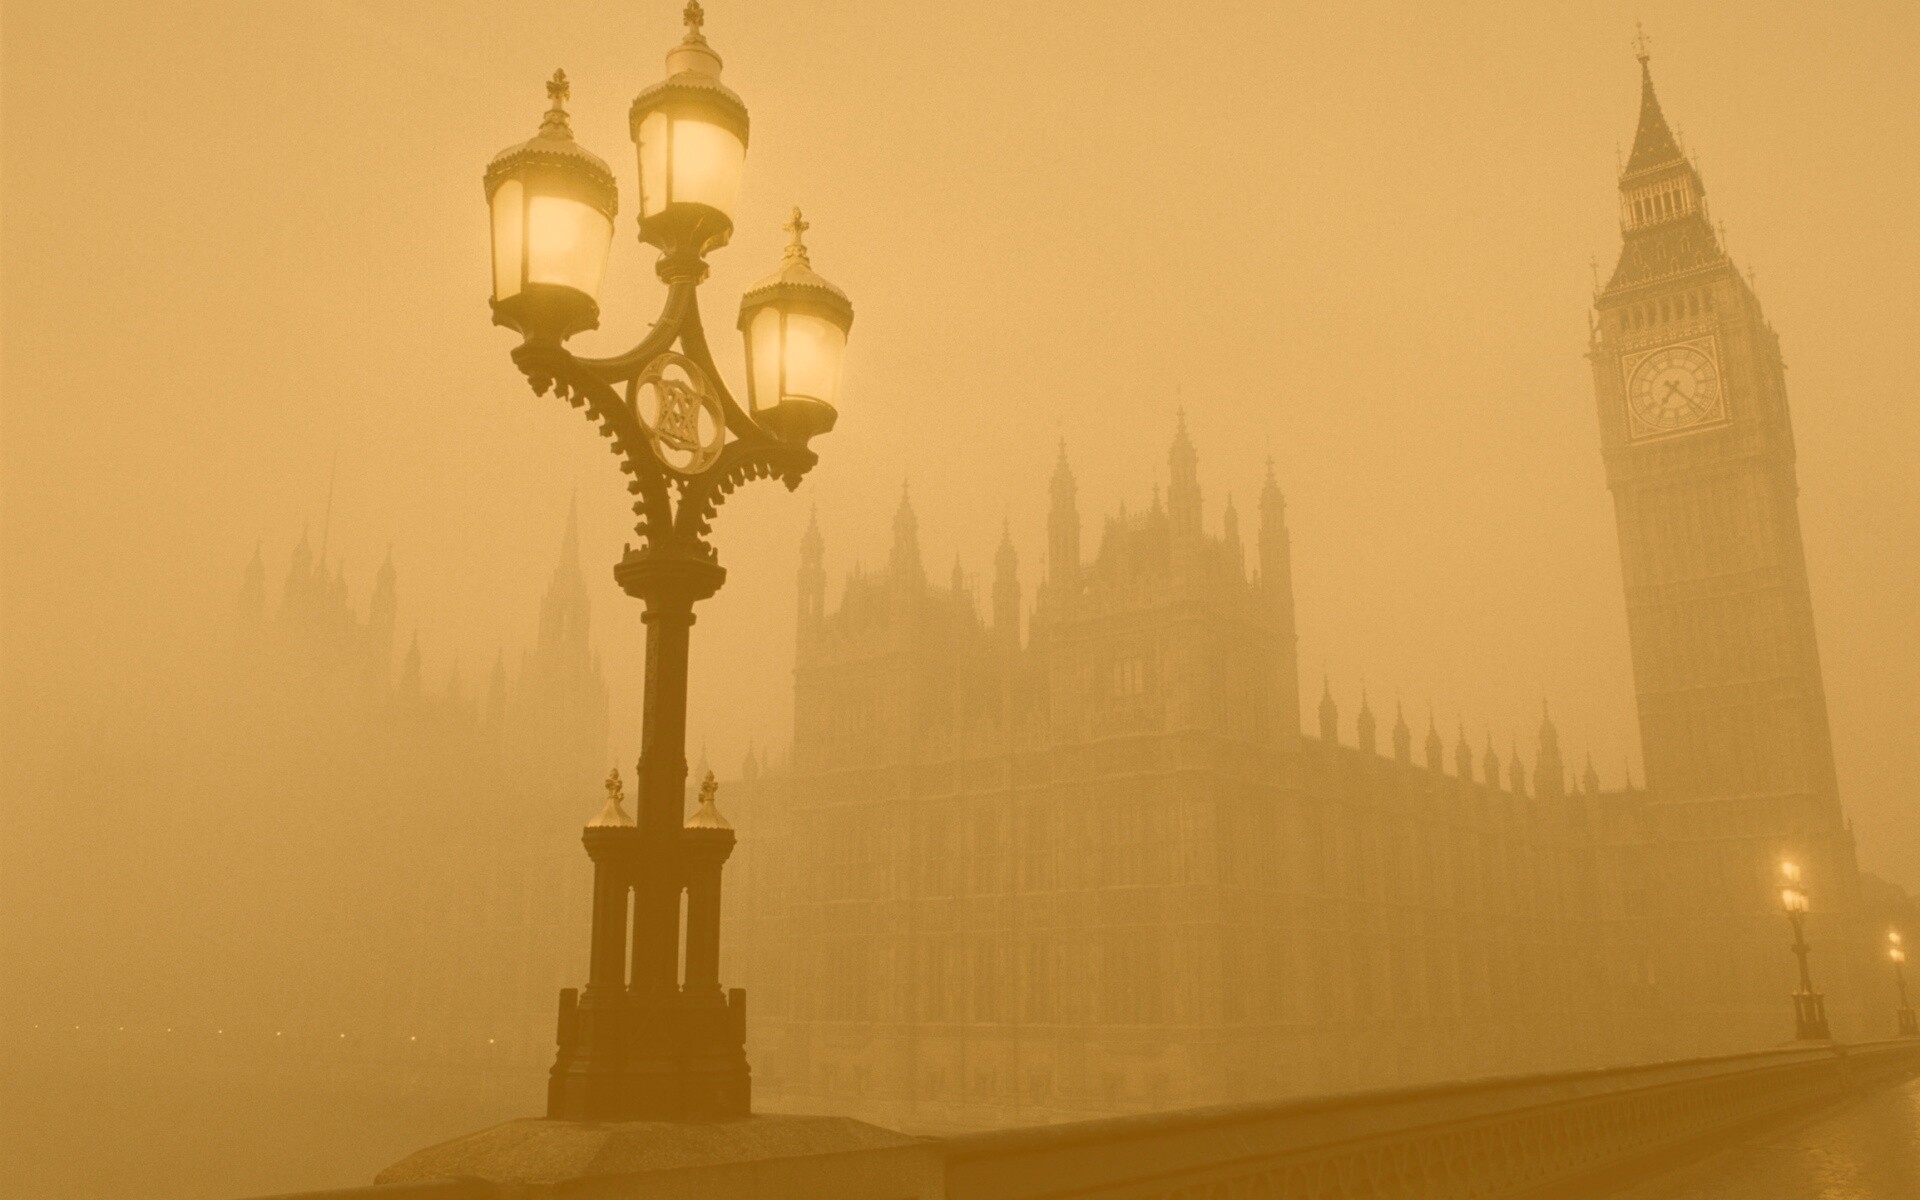 Лондон туман Биг Бен. Лондонский туман. Обои на рабочий стол Лондон. Туманный Лондон фон. Просто лондон